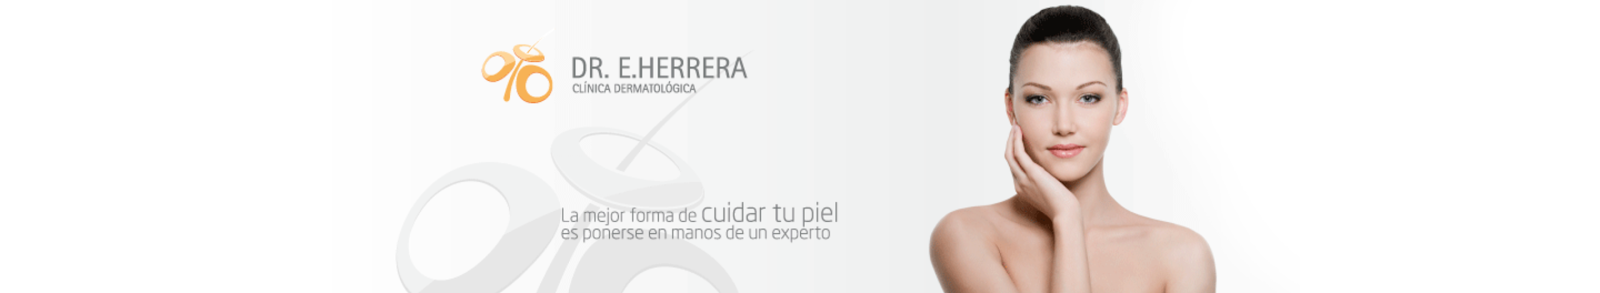 Blog Clínica Dermatológica Dr. E. Herrera